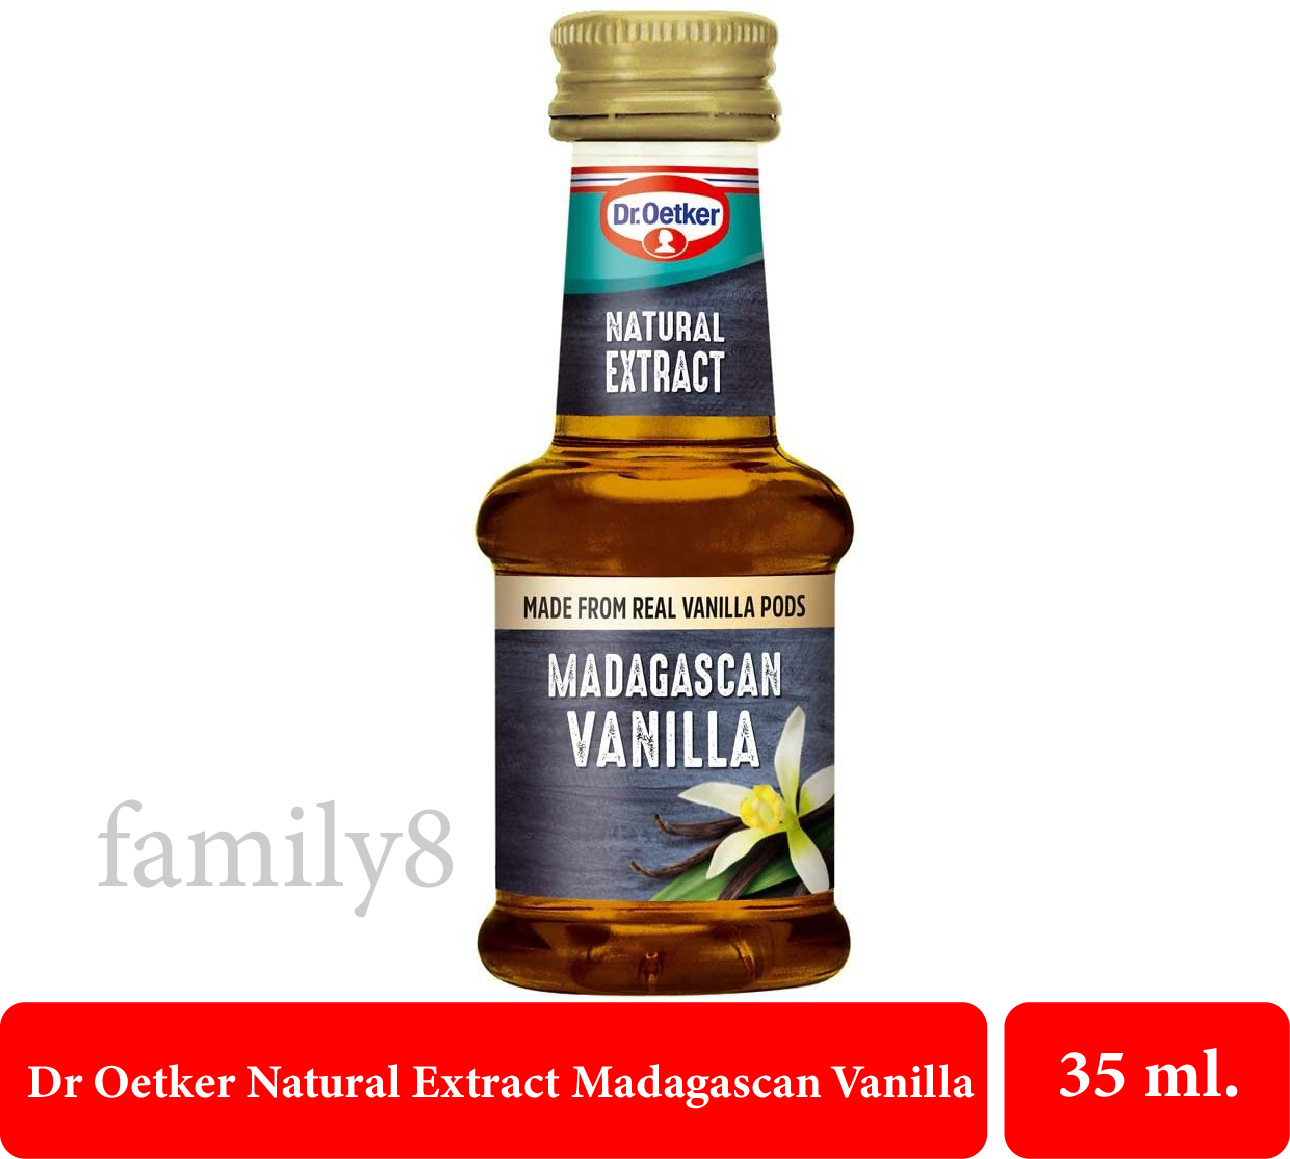 Dr Oetker Natural Extract Madagascan Vanilla, 35 ml.